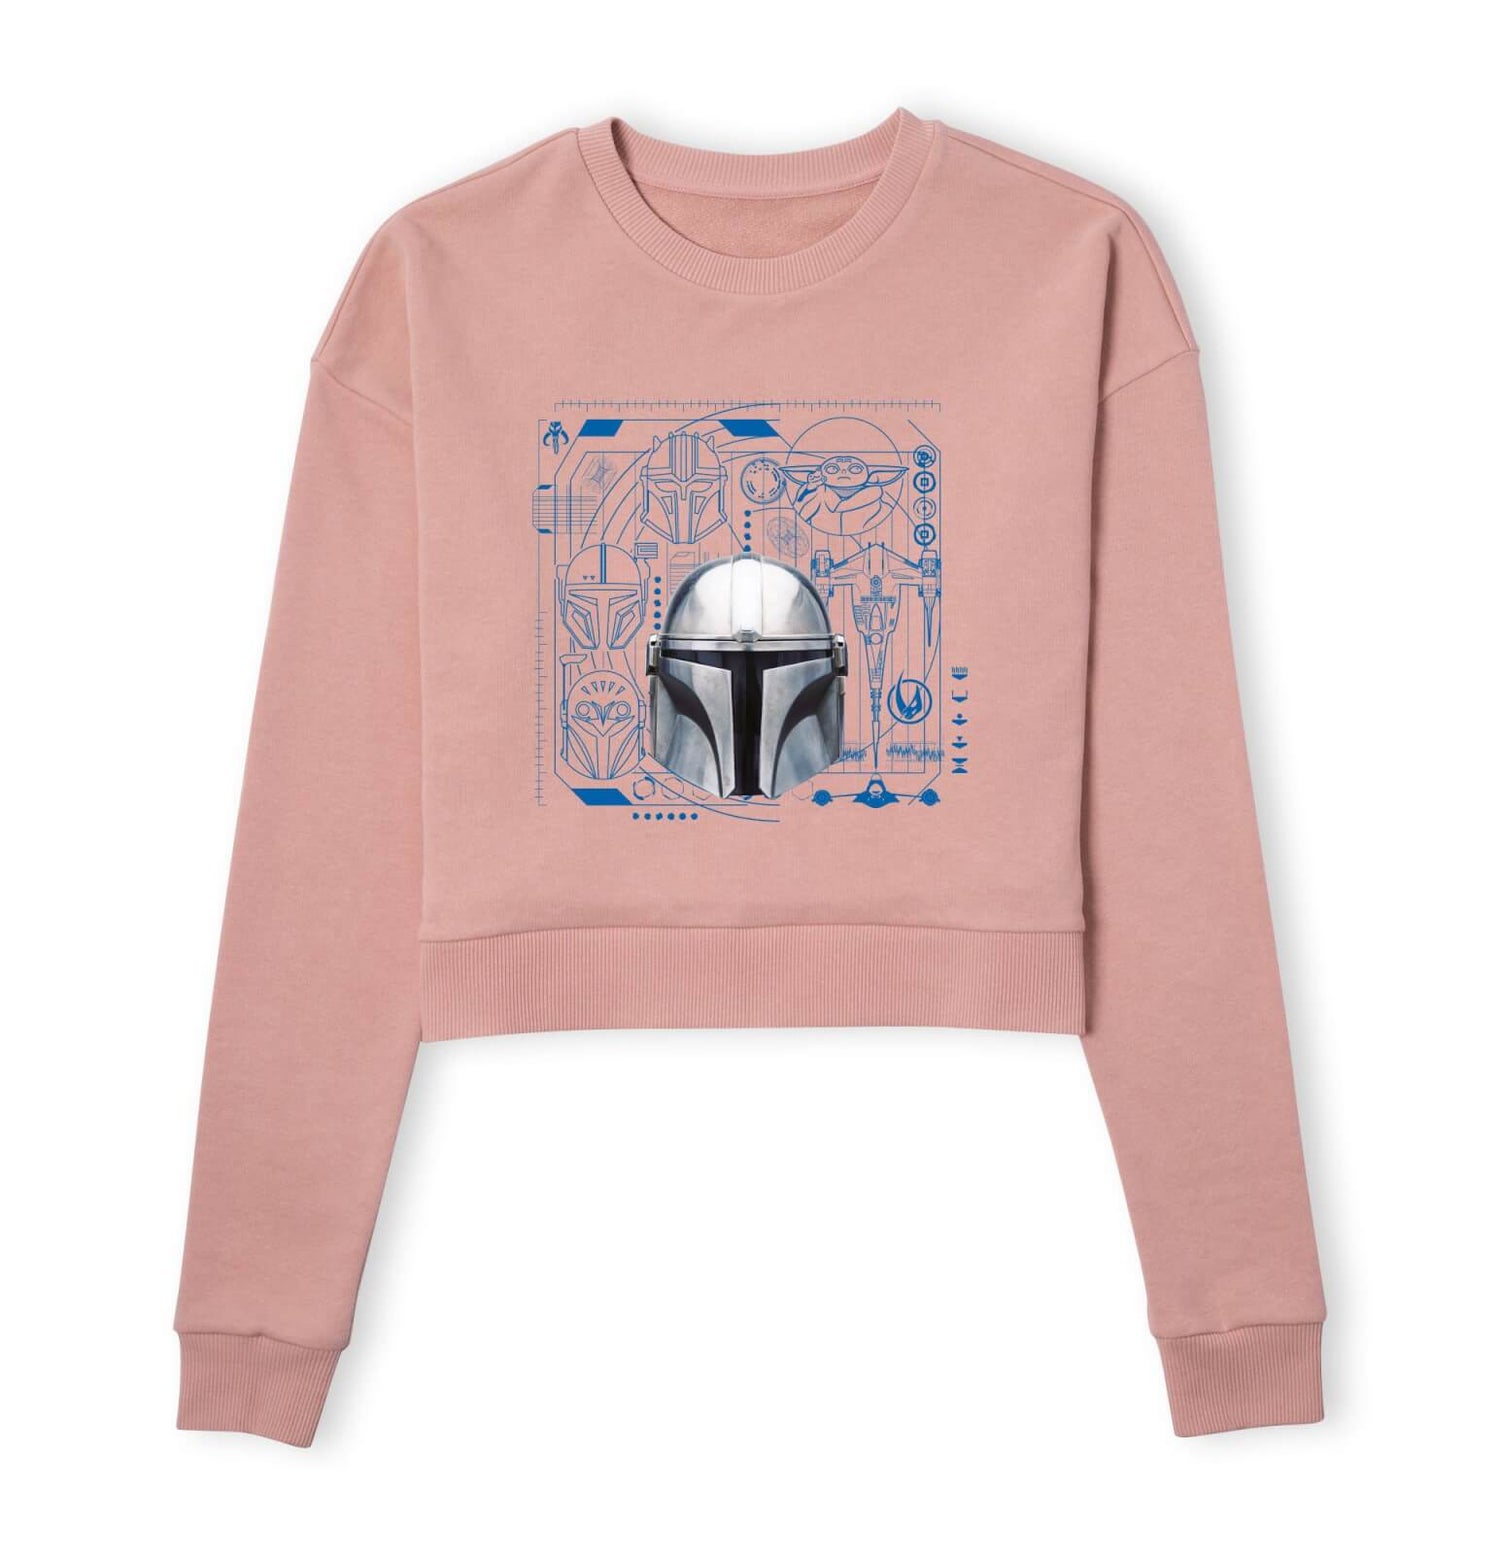 Star Wars The Mandalorian Schematics Women's Cropped Sweatshirt - Dusty Pink